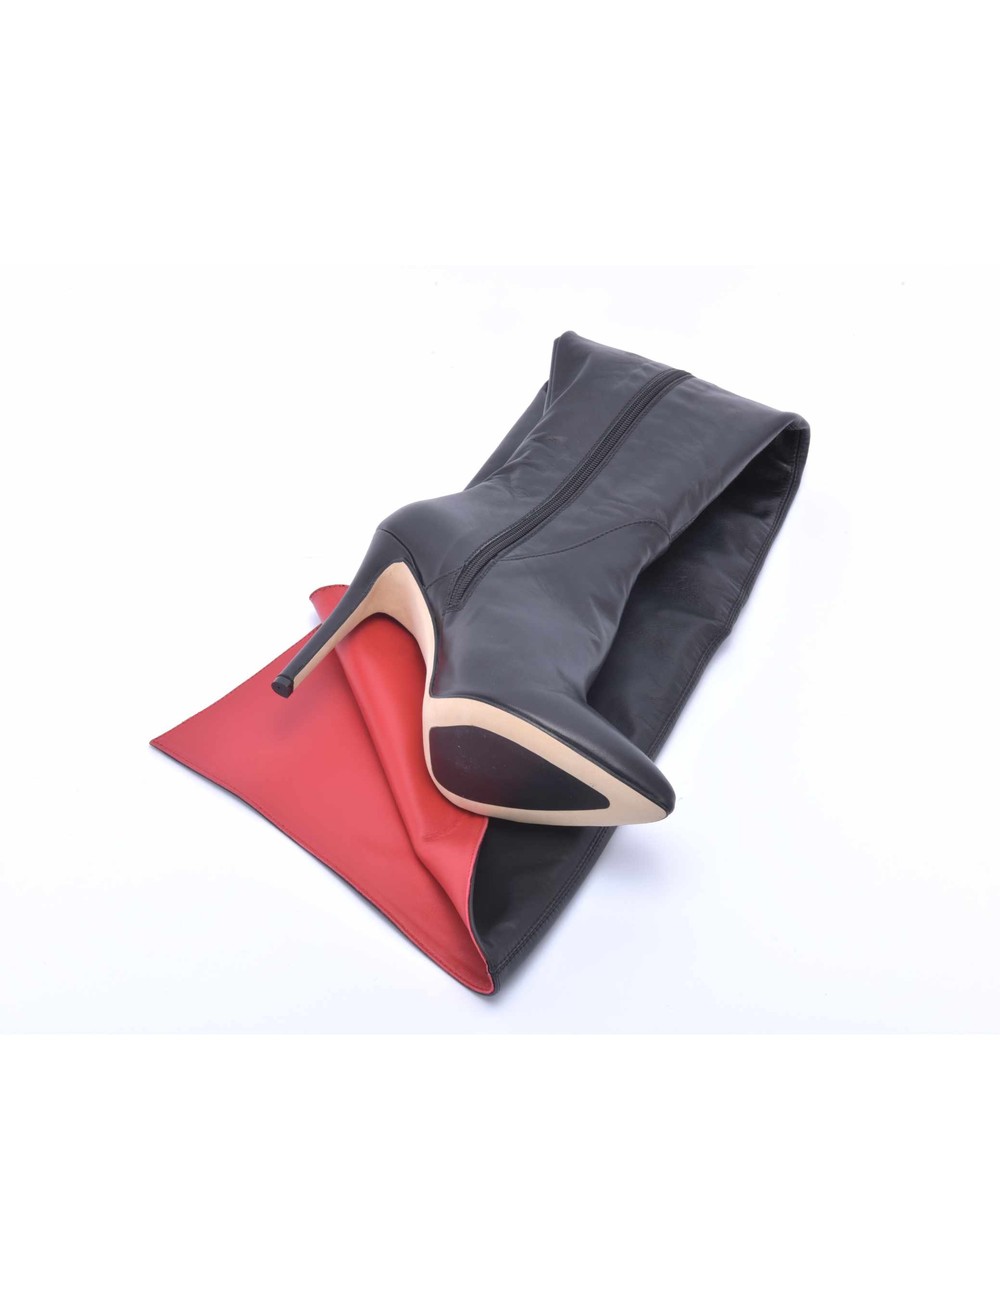 Sanctum High Italian thigh boots VESTA with 10cm stiletto heels in genuine leather